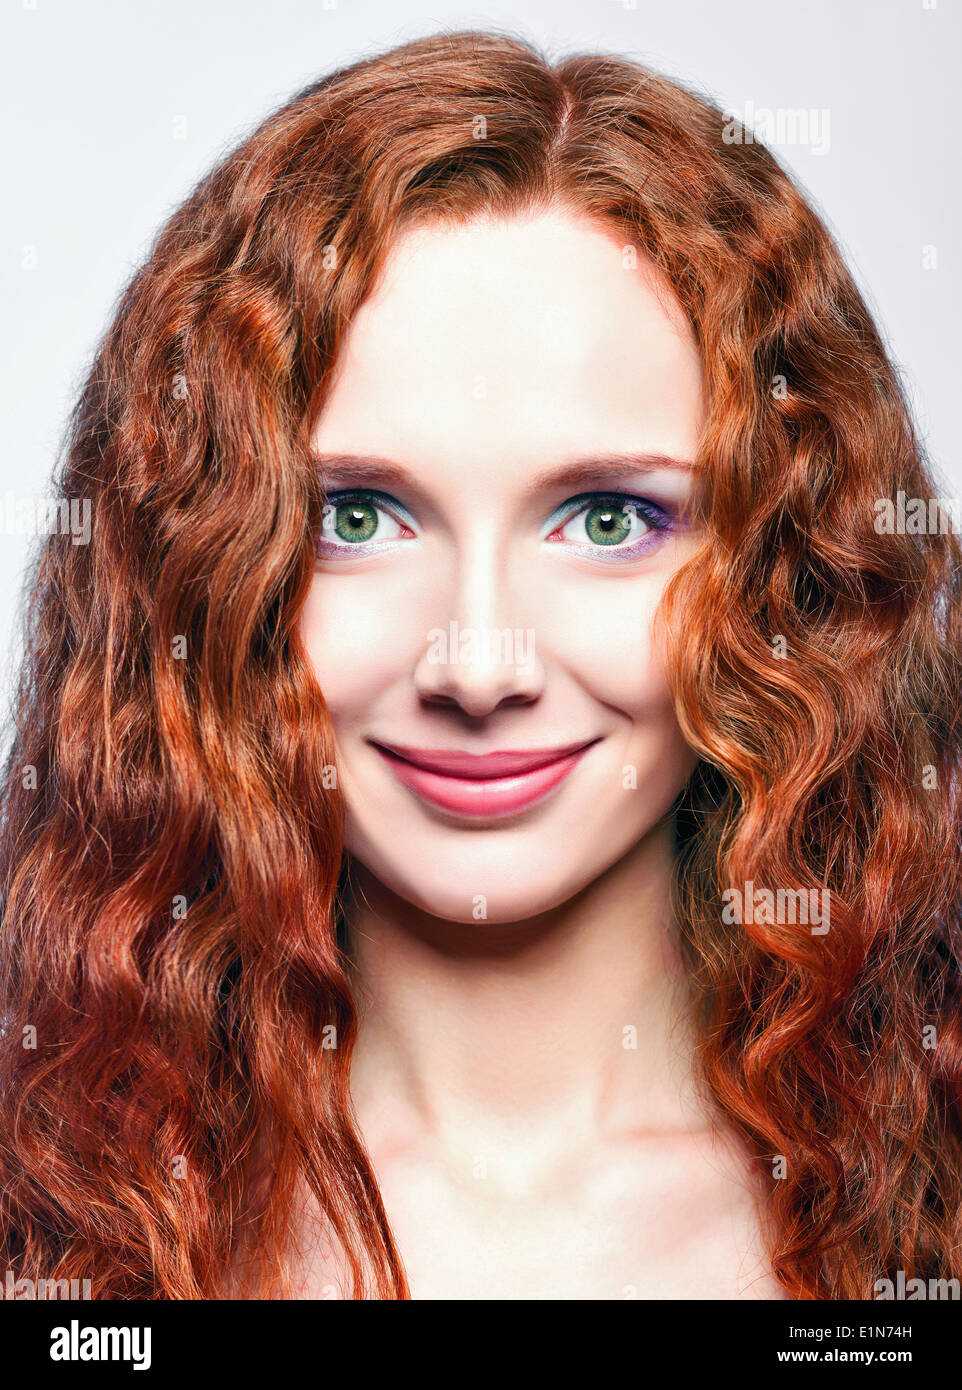 Closeup portrait of a beautiful smiling redhead girl Stock Photo